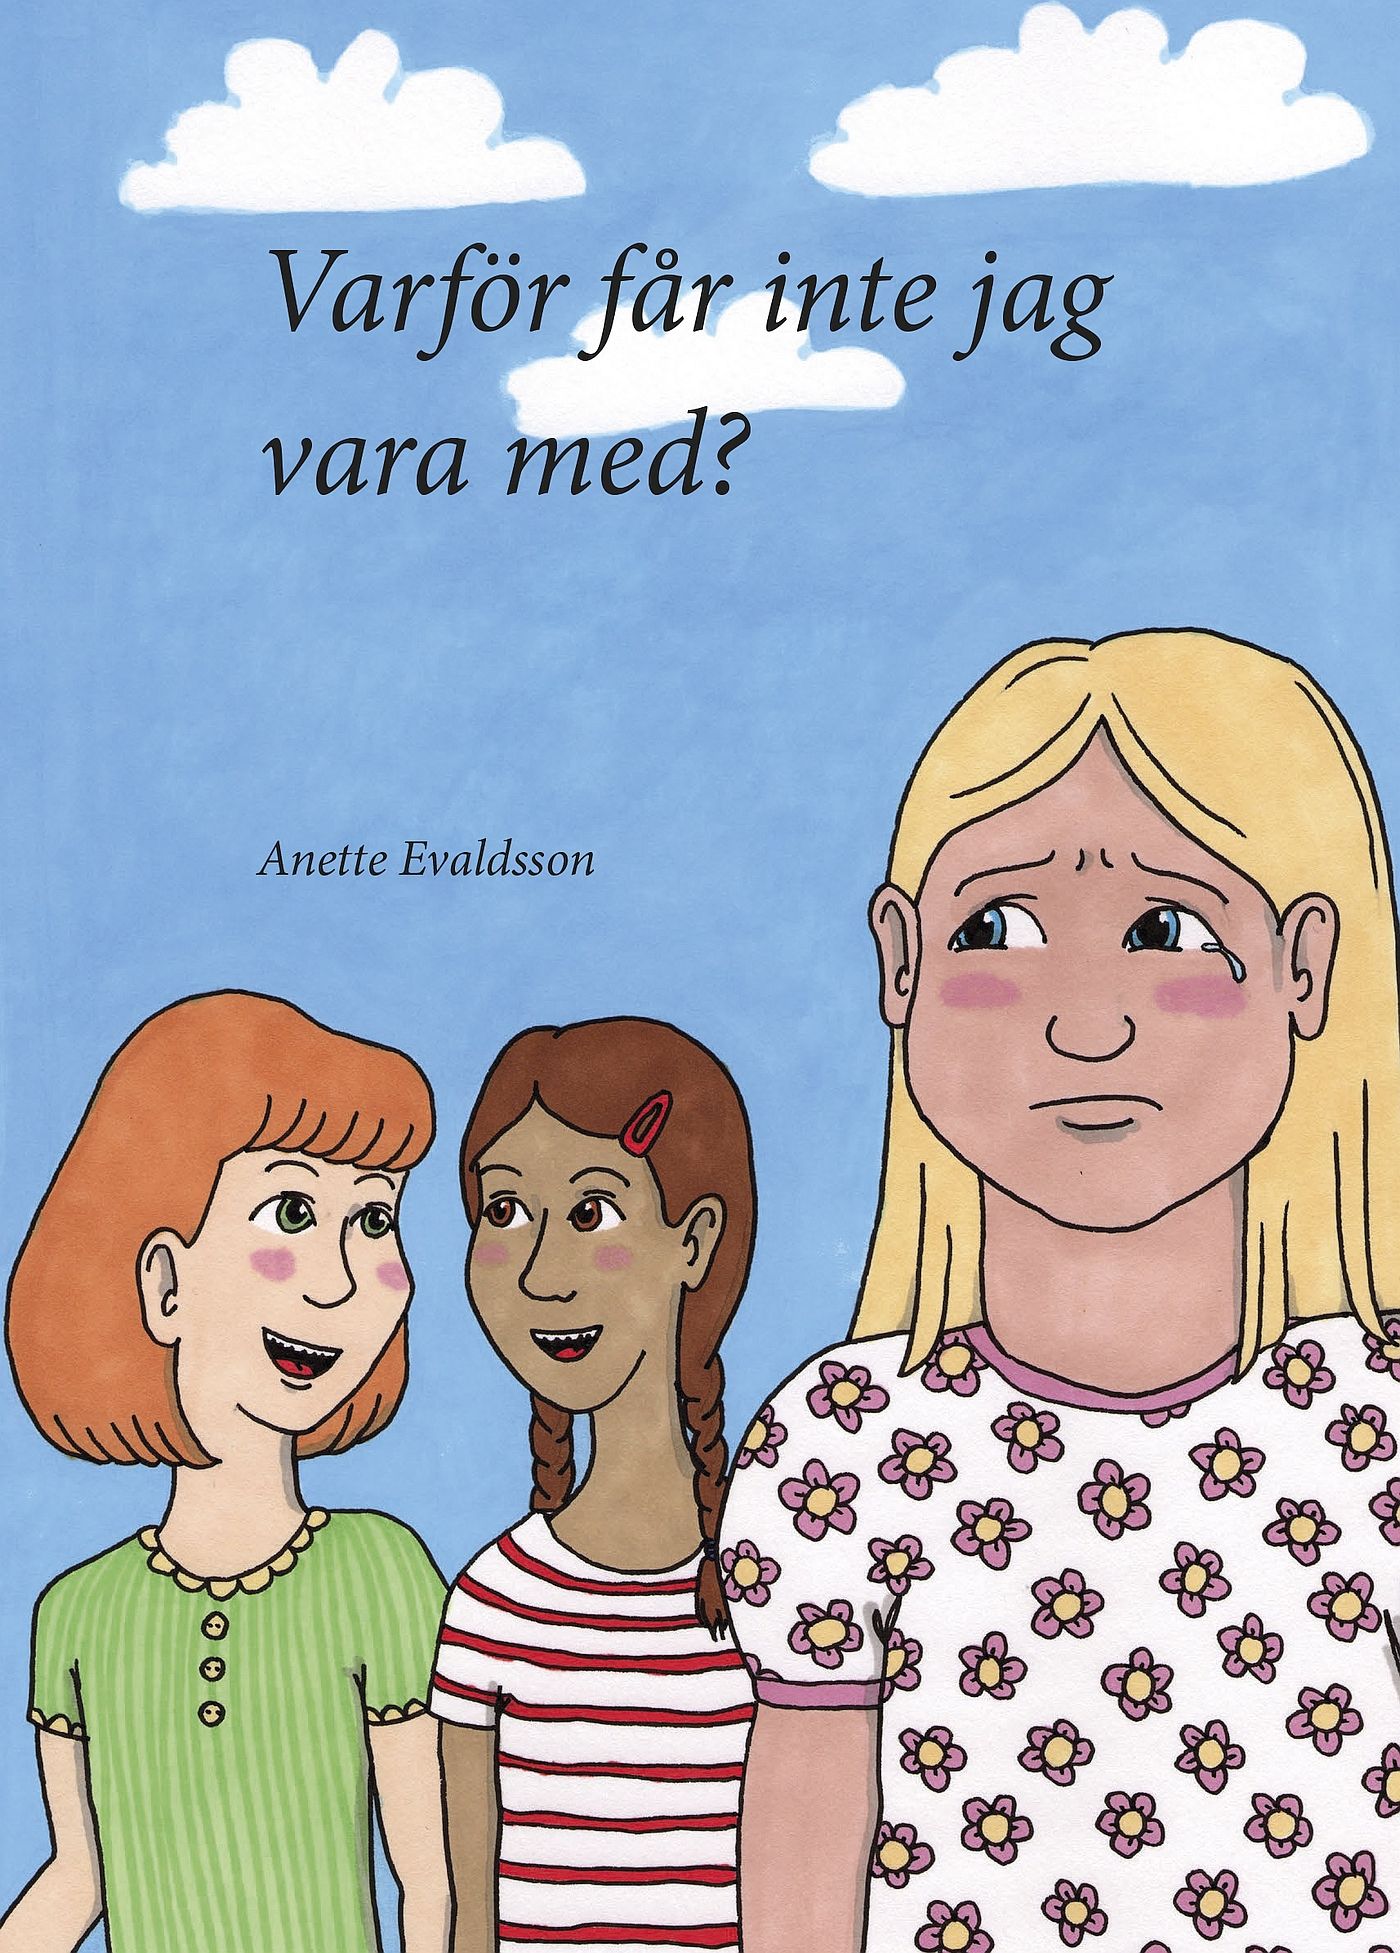 Varför får inte jag vara med?, e-bog af Anette Evaldsson